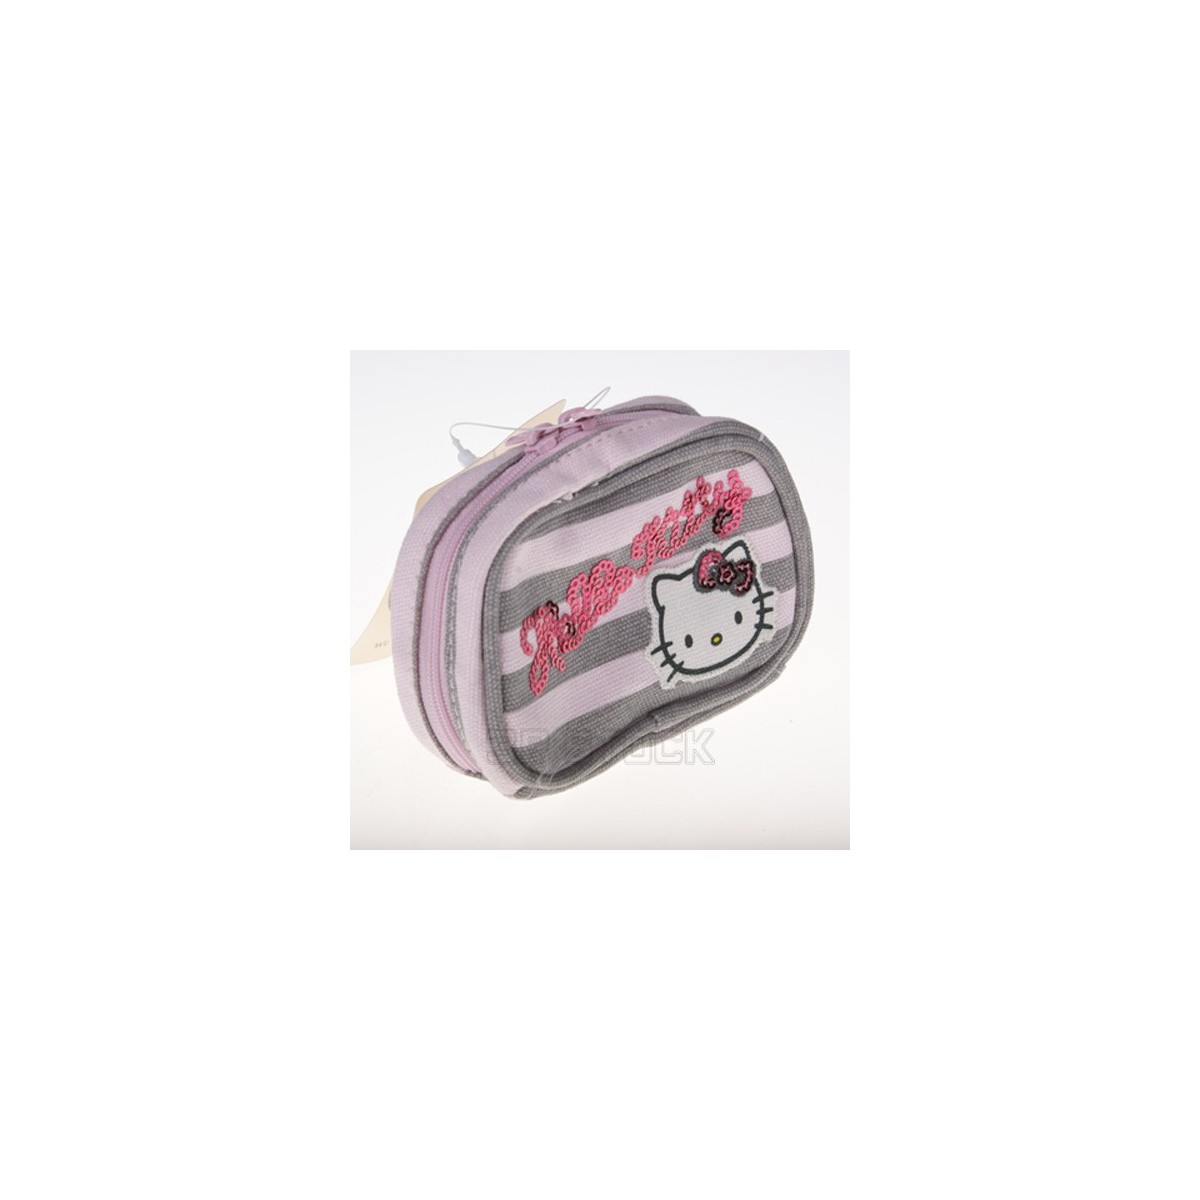 Hello Kitty Spangle GR KT astuccio con zip case with zip